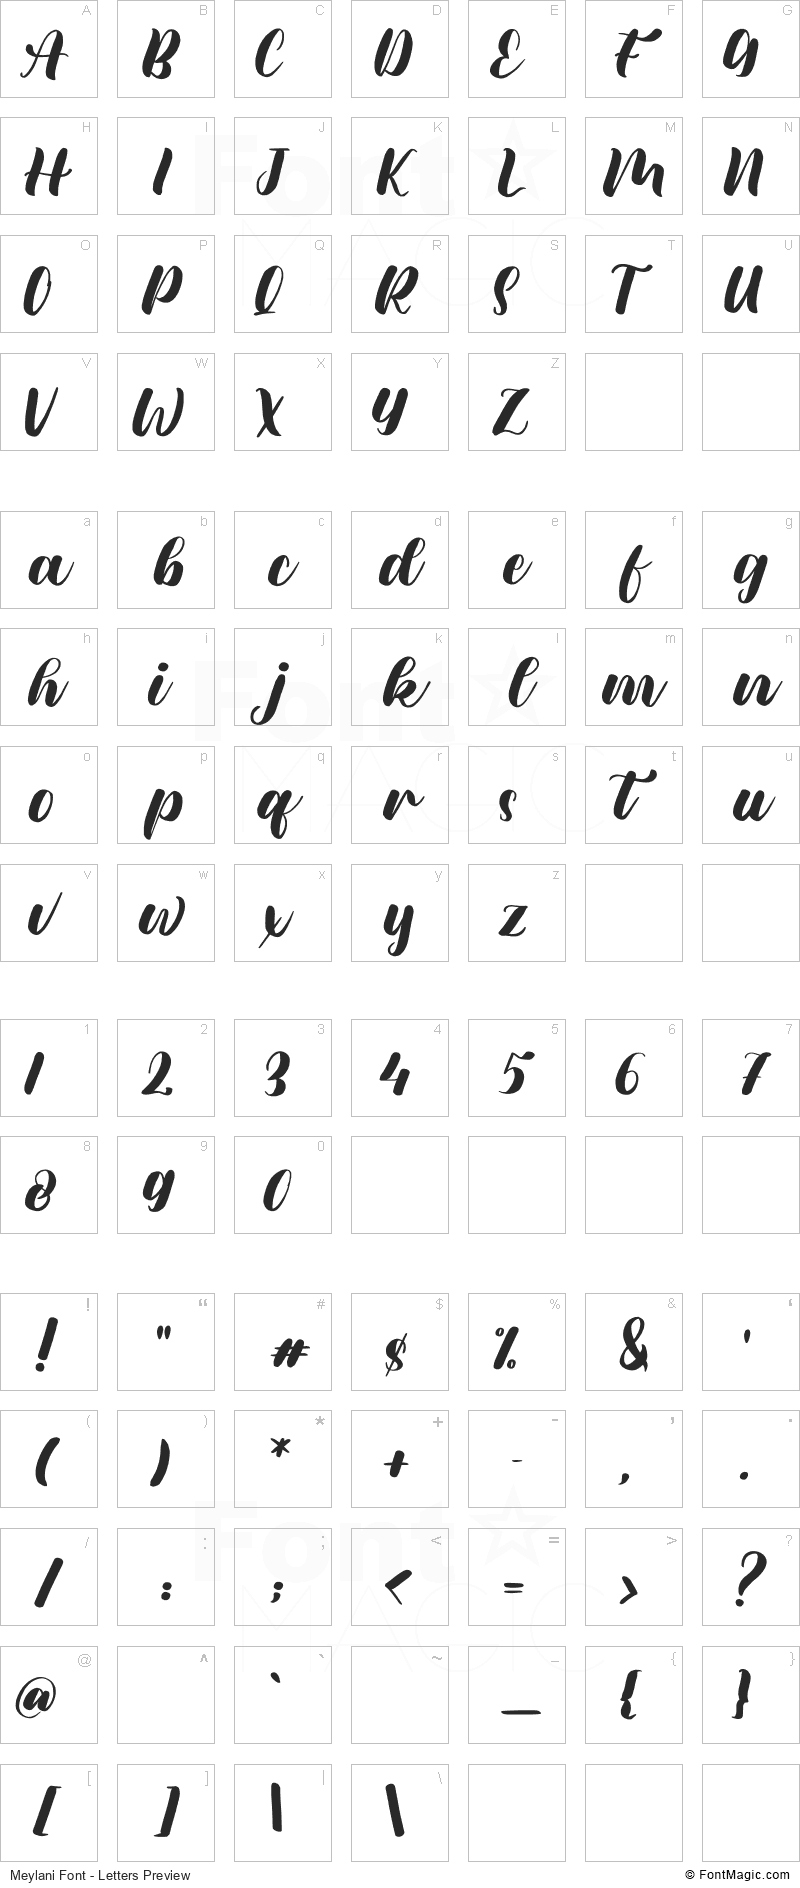 Meylani Font - All Latters Preview Chart